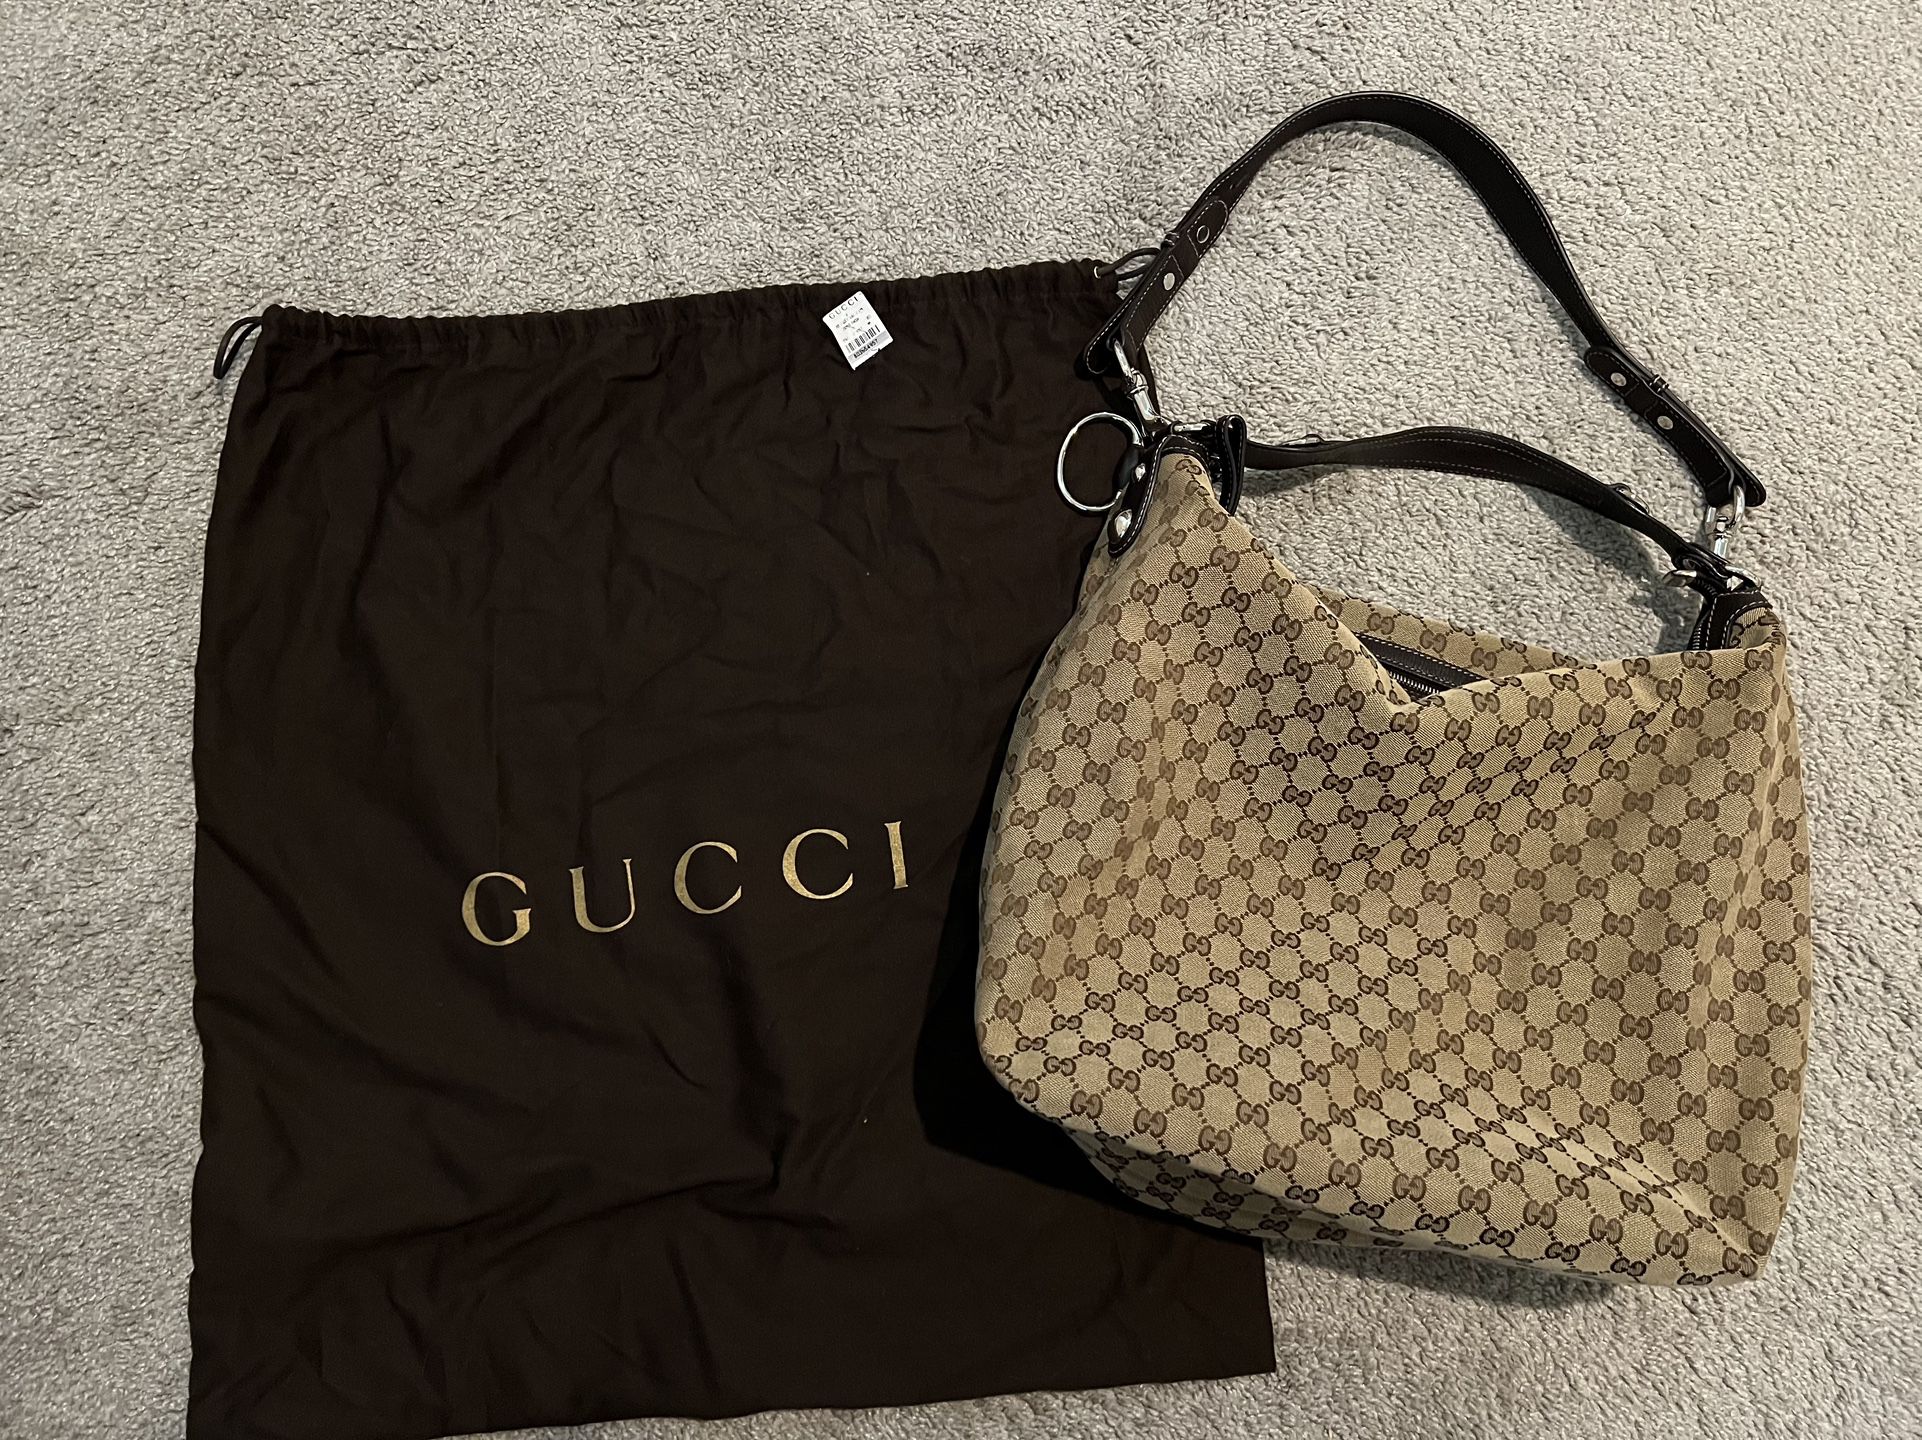  Gucci Hobo Medium Bag